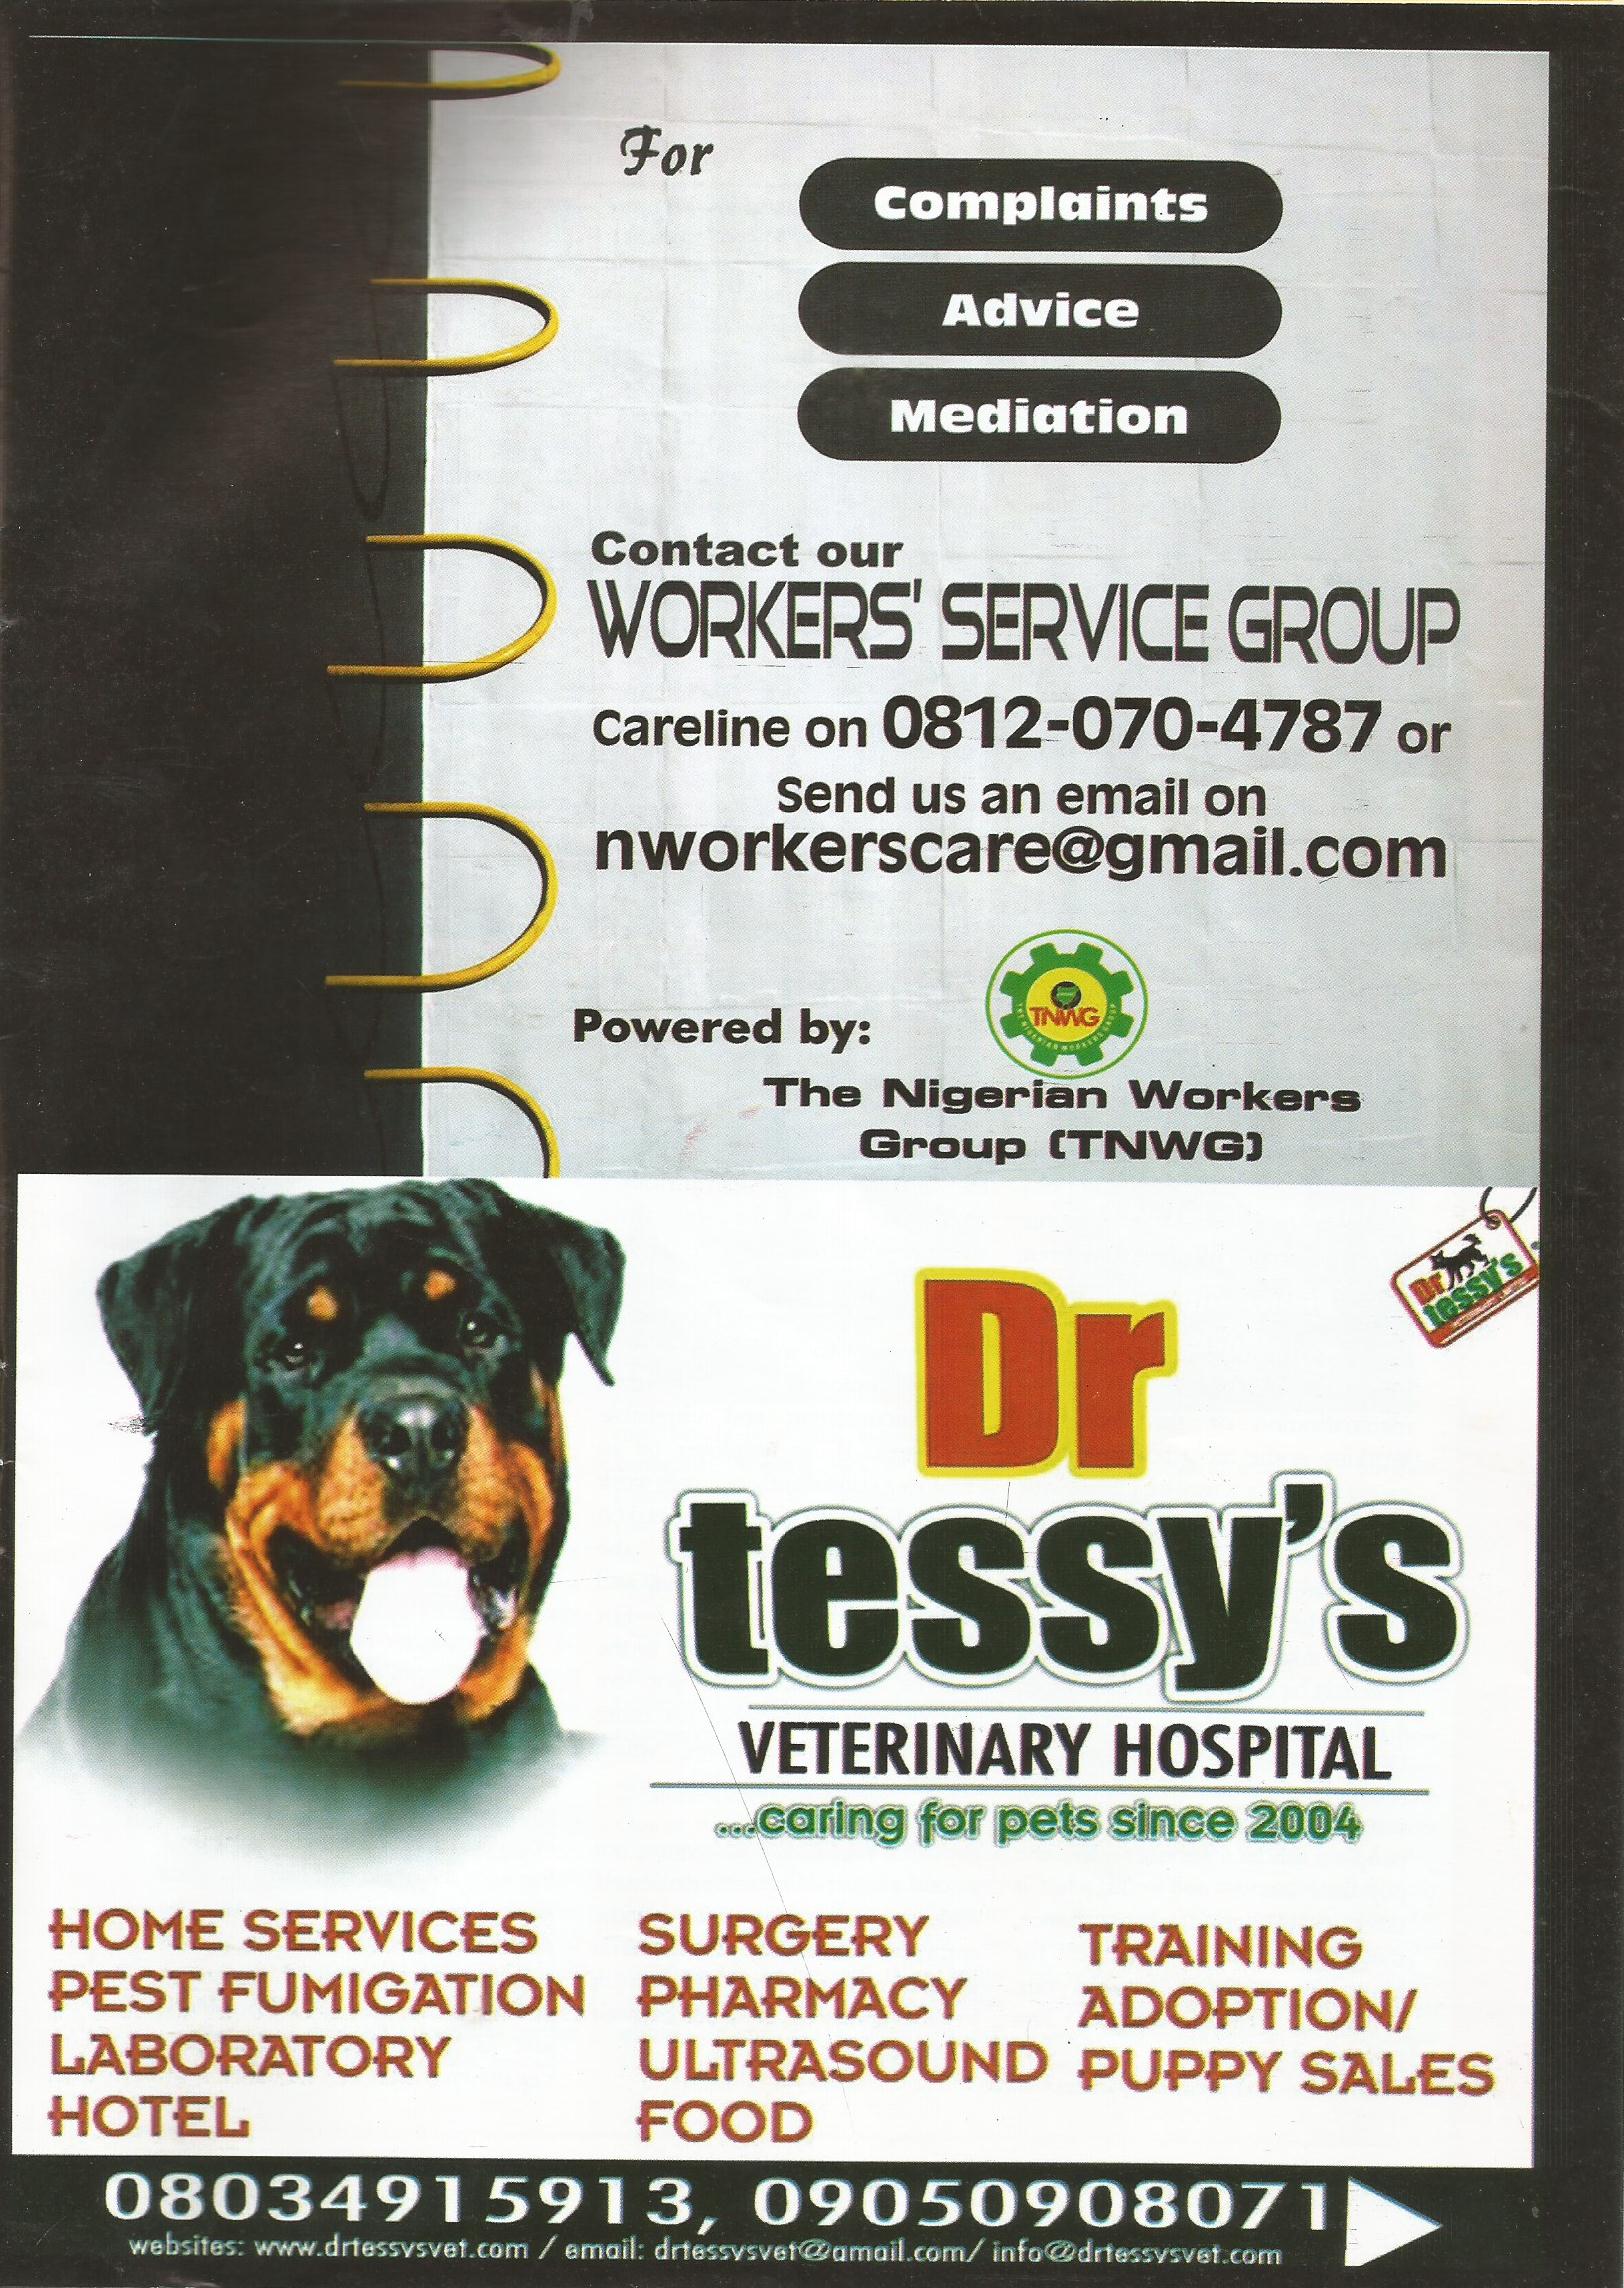 Dr Tessy's veterinary hospital